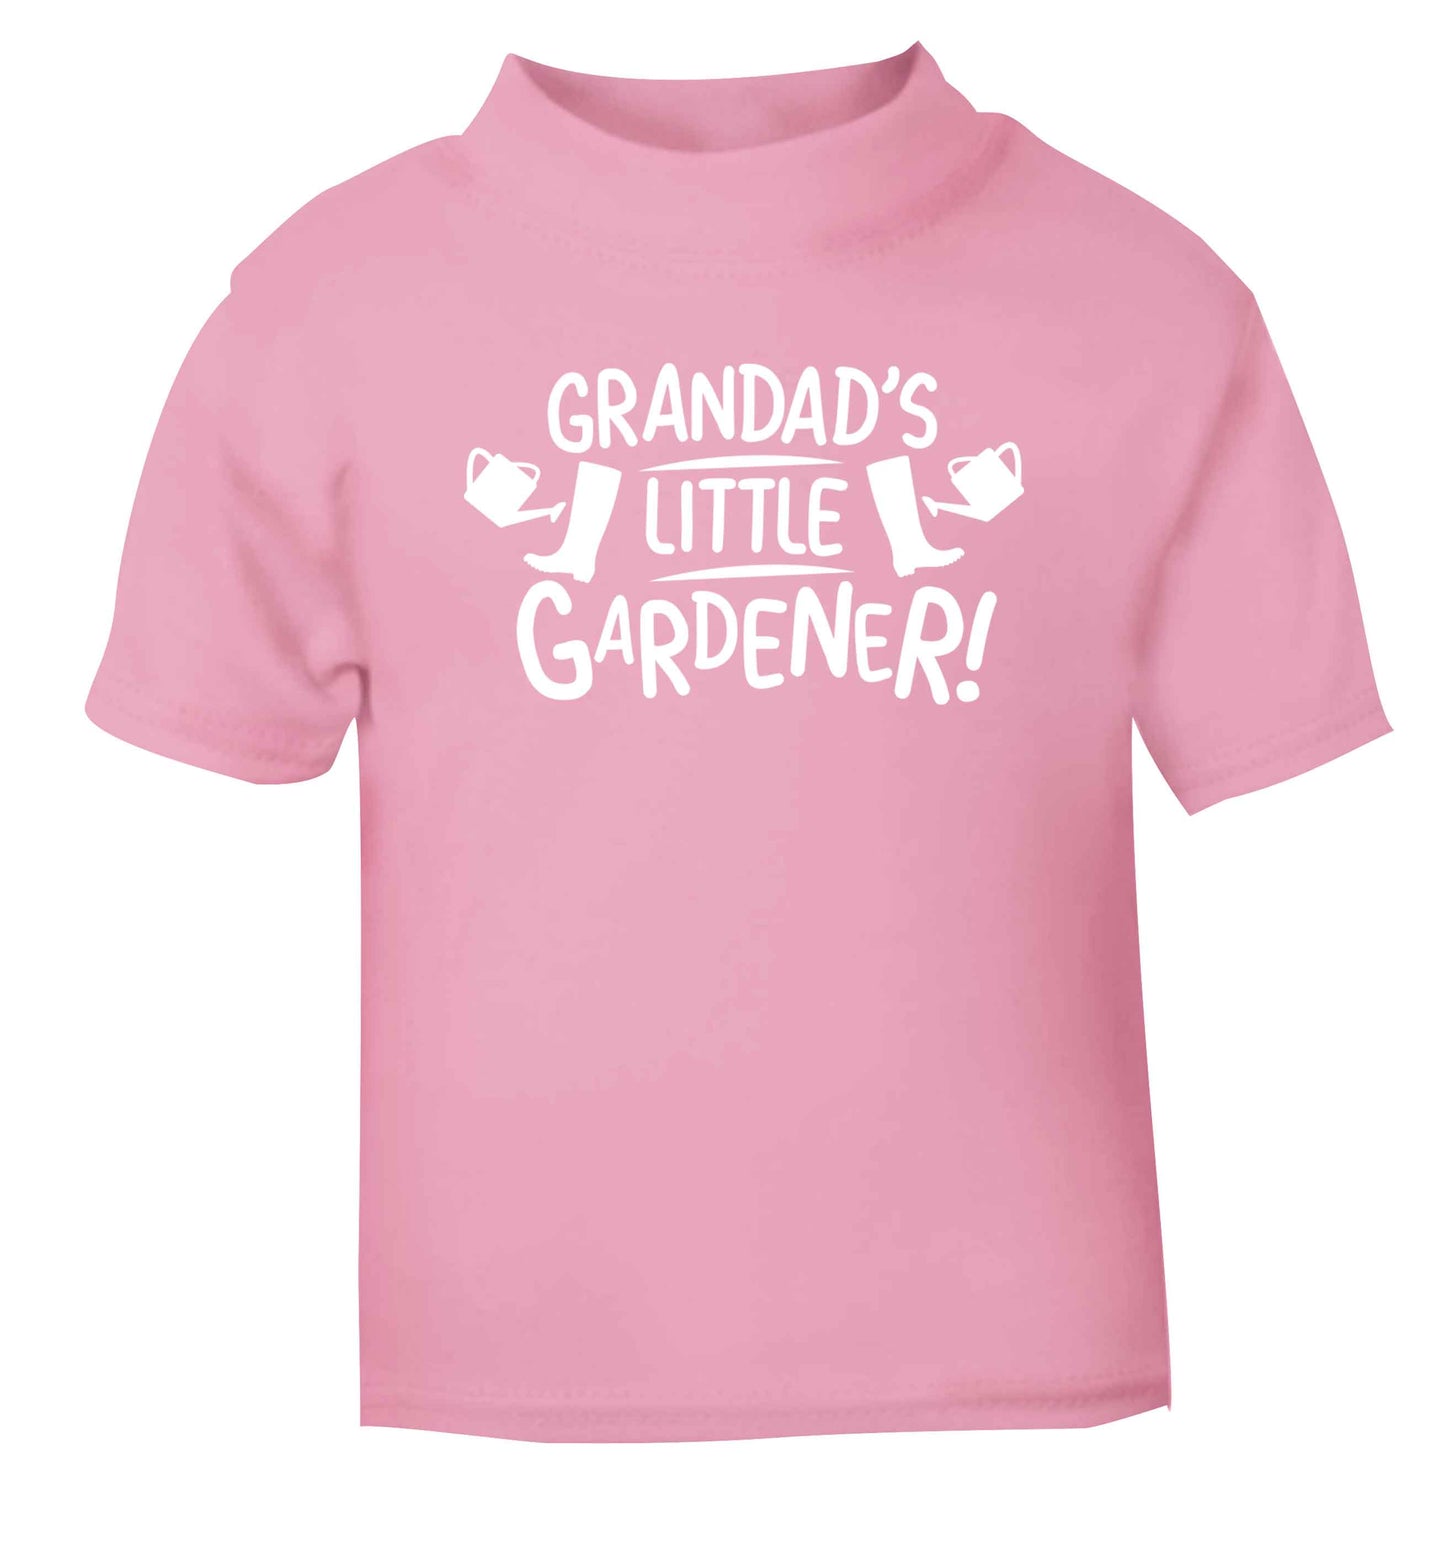 Grandad's little gardener light pink Baby Toddler Tshirt 2 Years